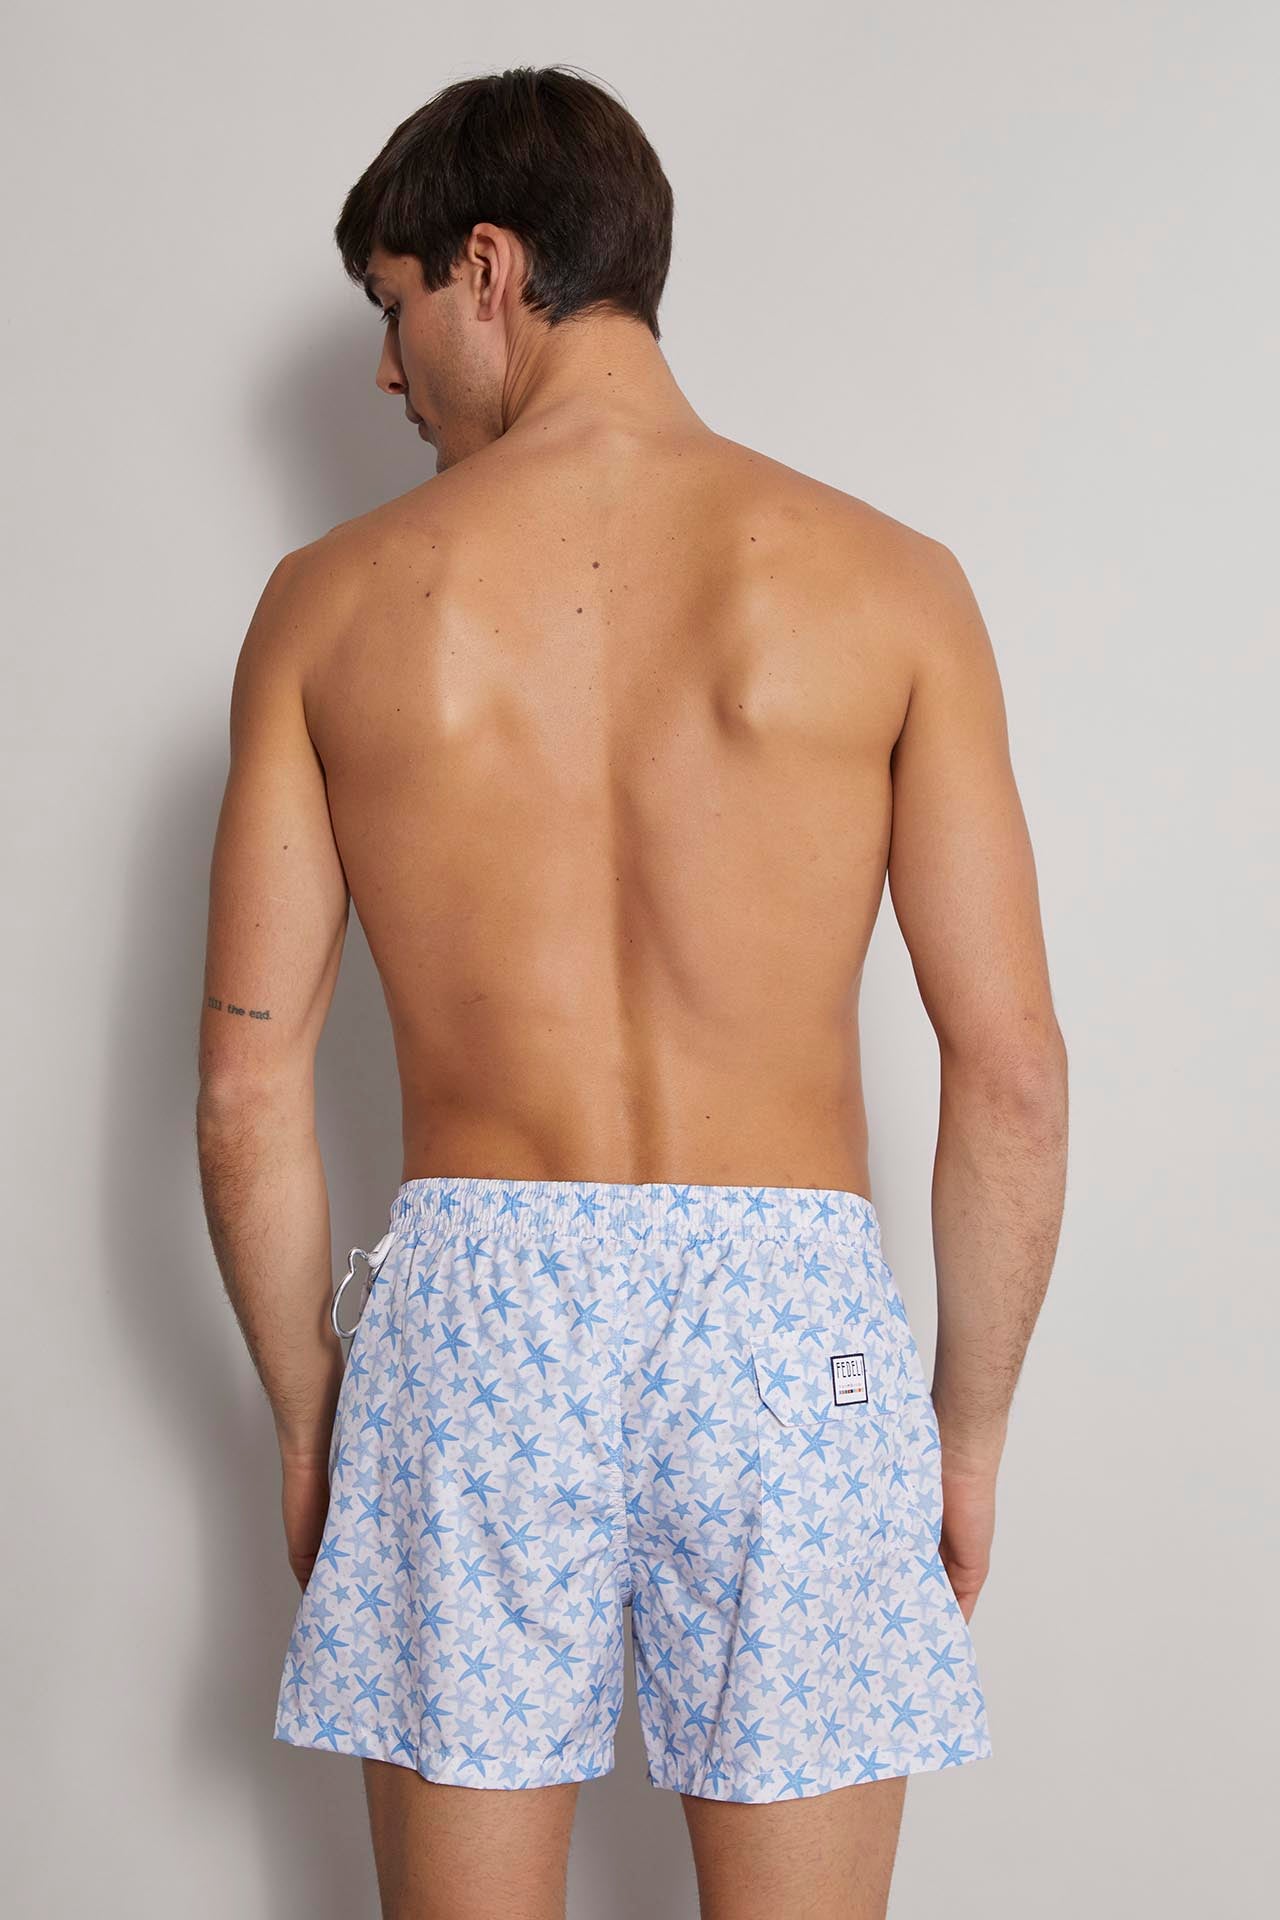 Men's sustainable designer swim trunks with blue stellamarina patterns Madeira